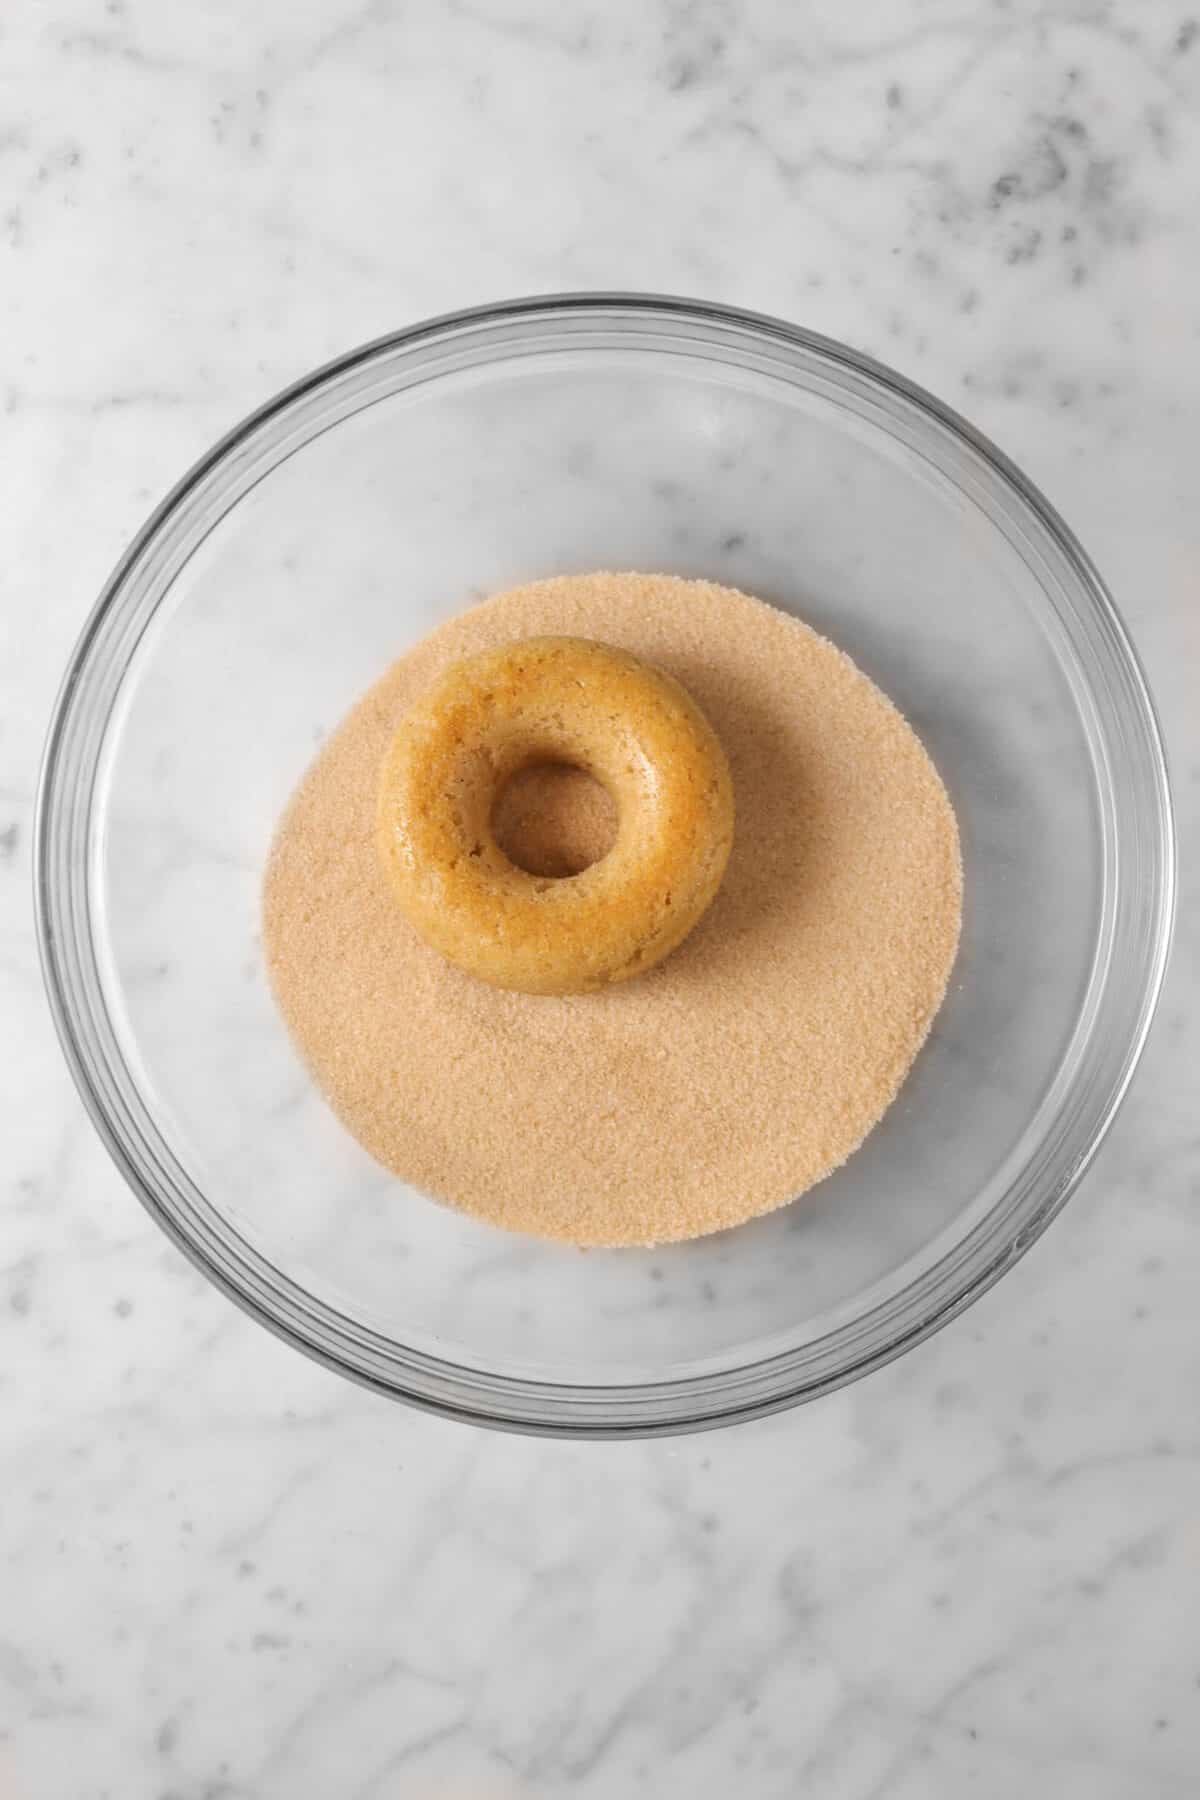 a cinnamon donut in cinnamon sugar